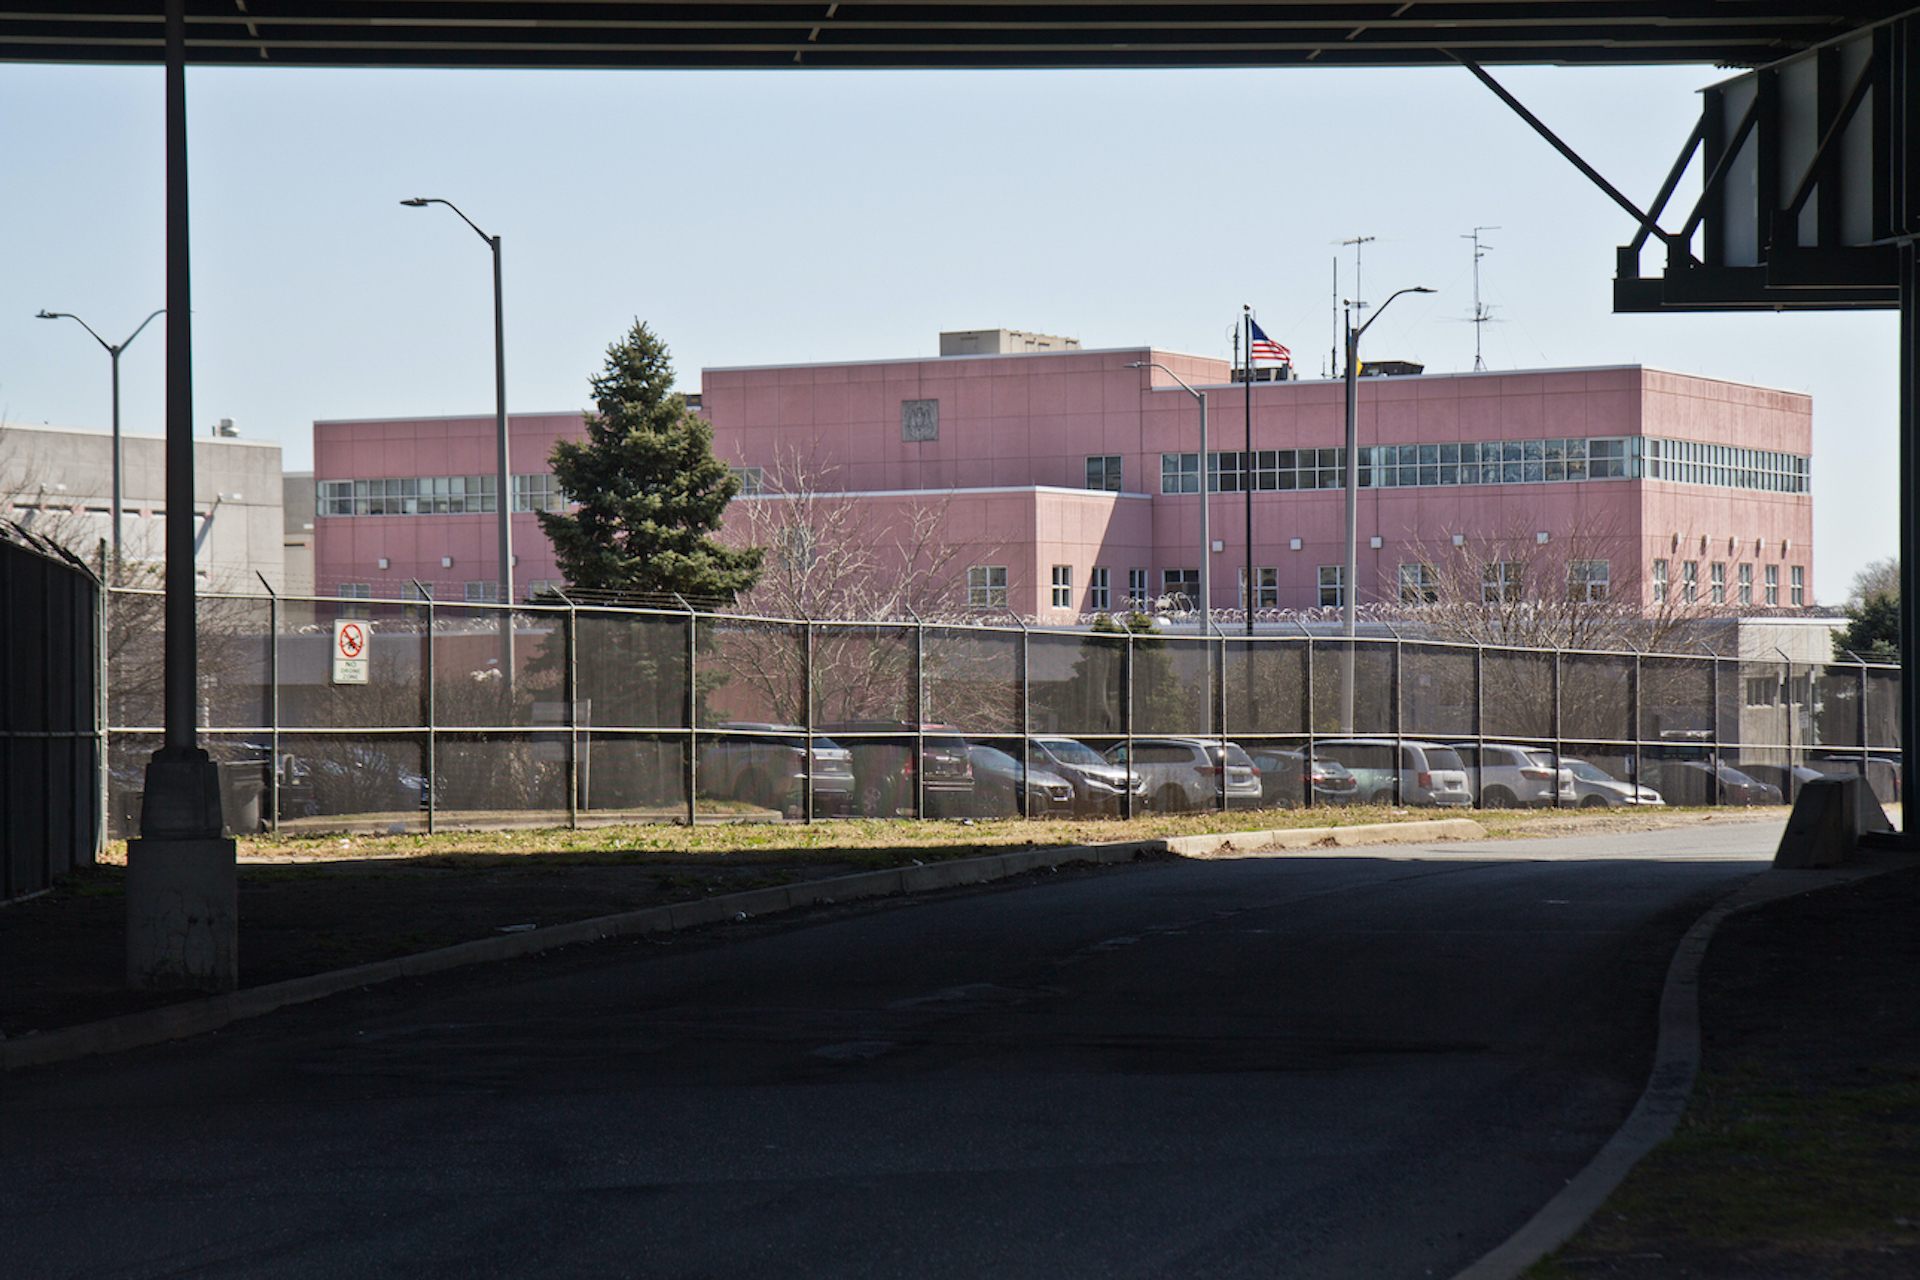 Curran-Fromhold Correctional Facility in Philadelphia’s Holmesburg neighborhood.